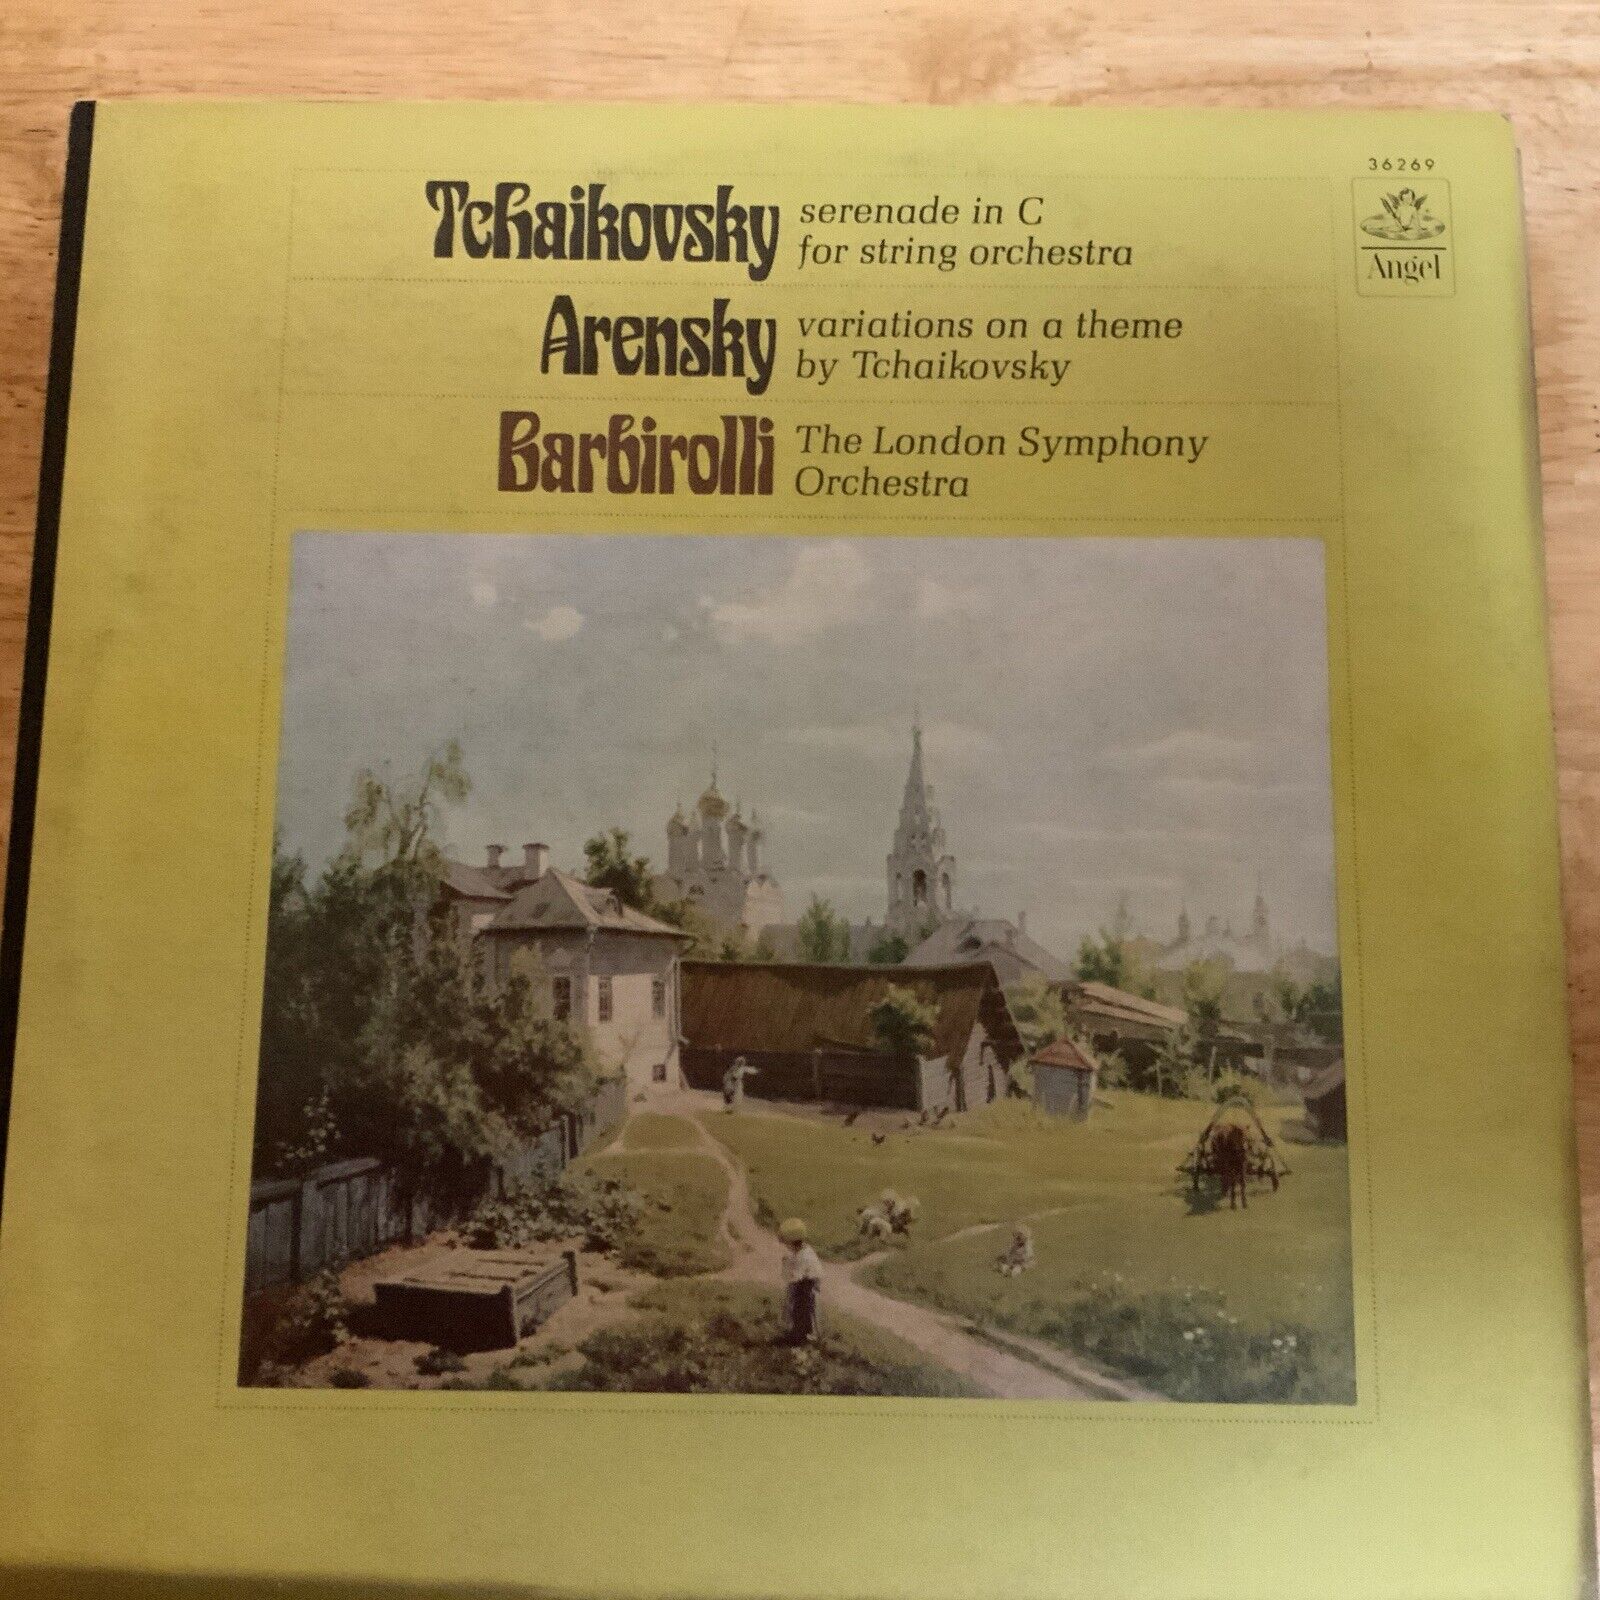 Serenade in C / Variations on a Theme by Tchaikovsky kl [Vinyl LP] [Vinyl] The L